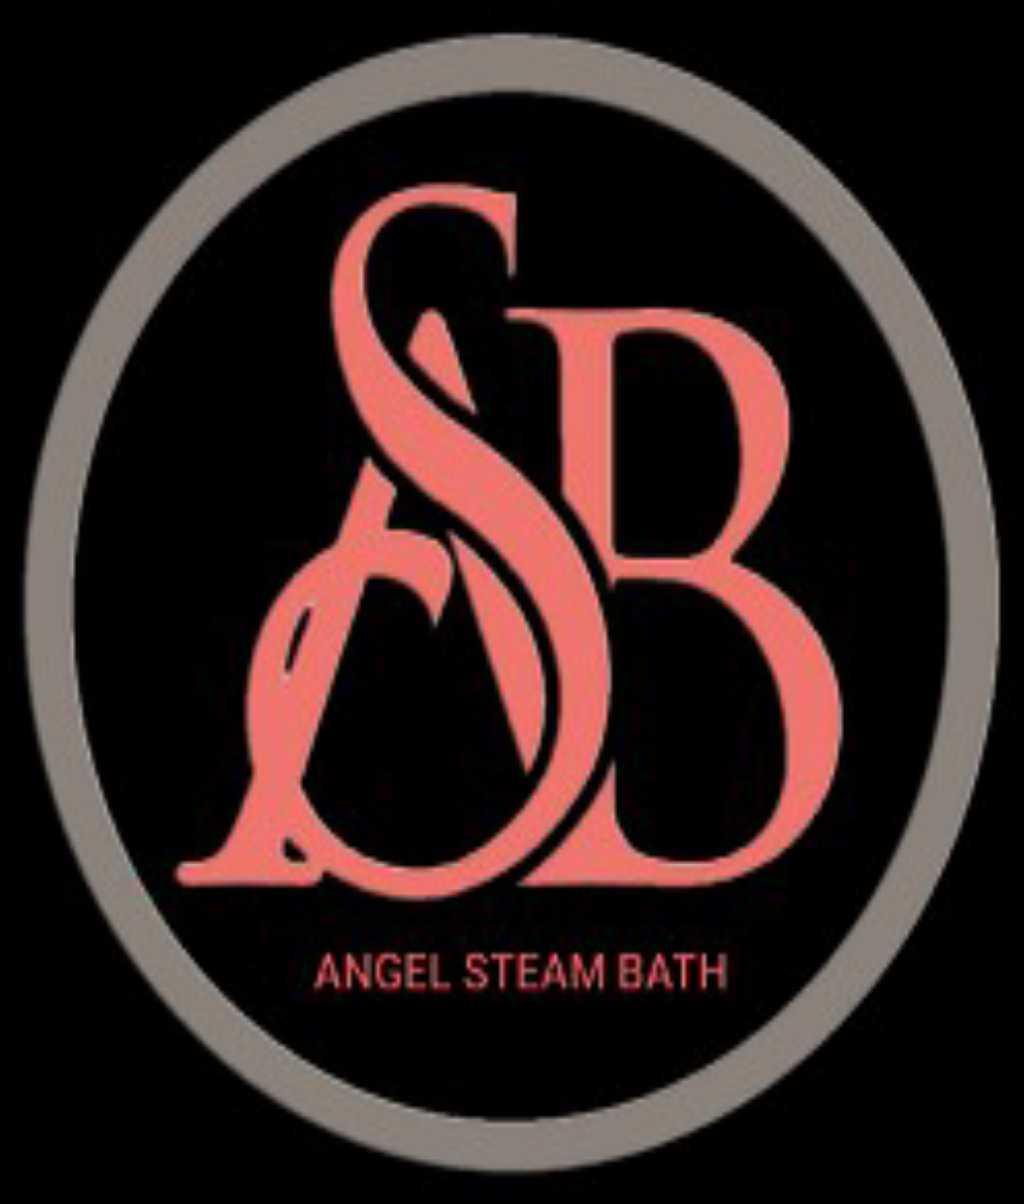 ANGEL STEAM BATH